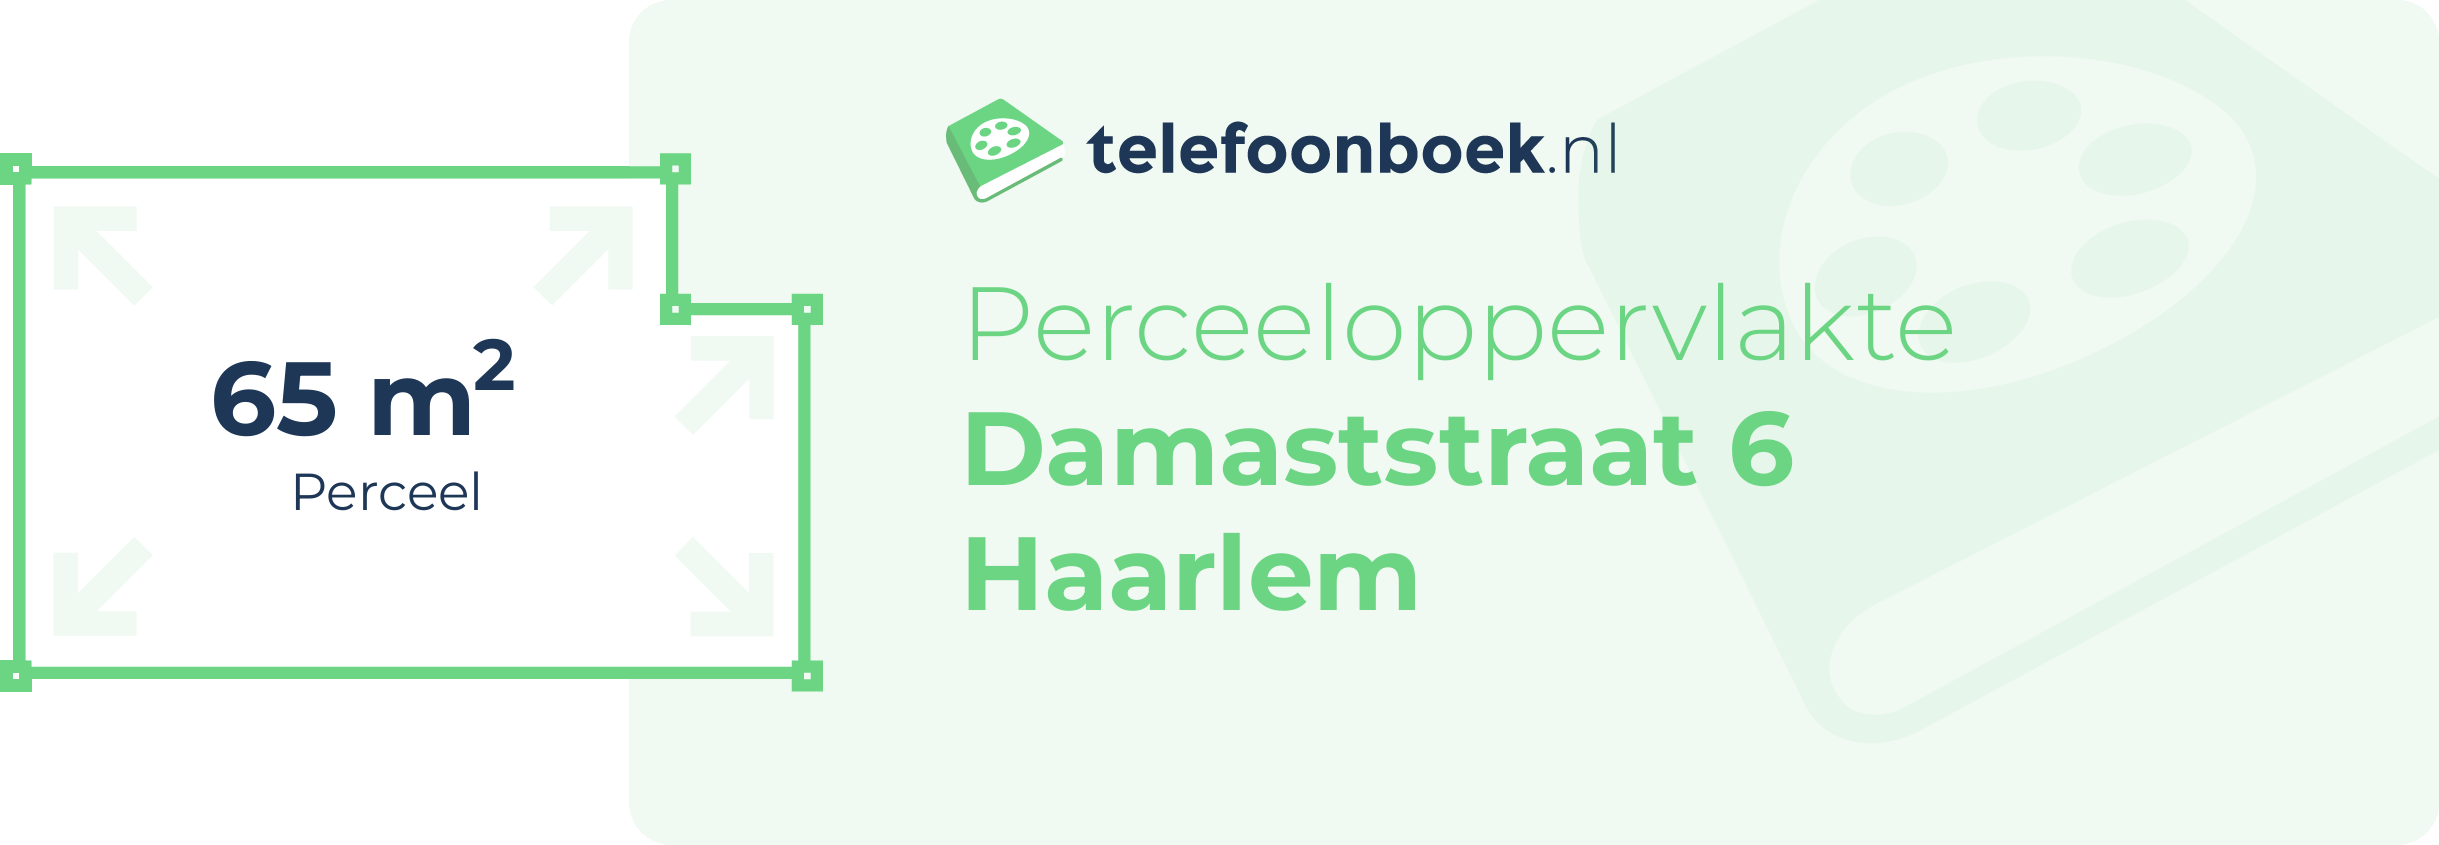 Perceeloppervlakte Damaststraat 6 Haarlem